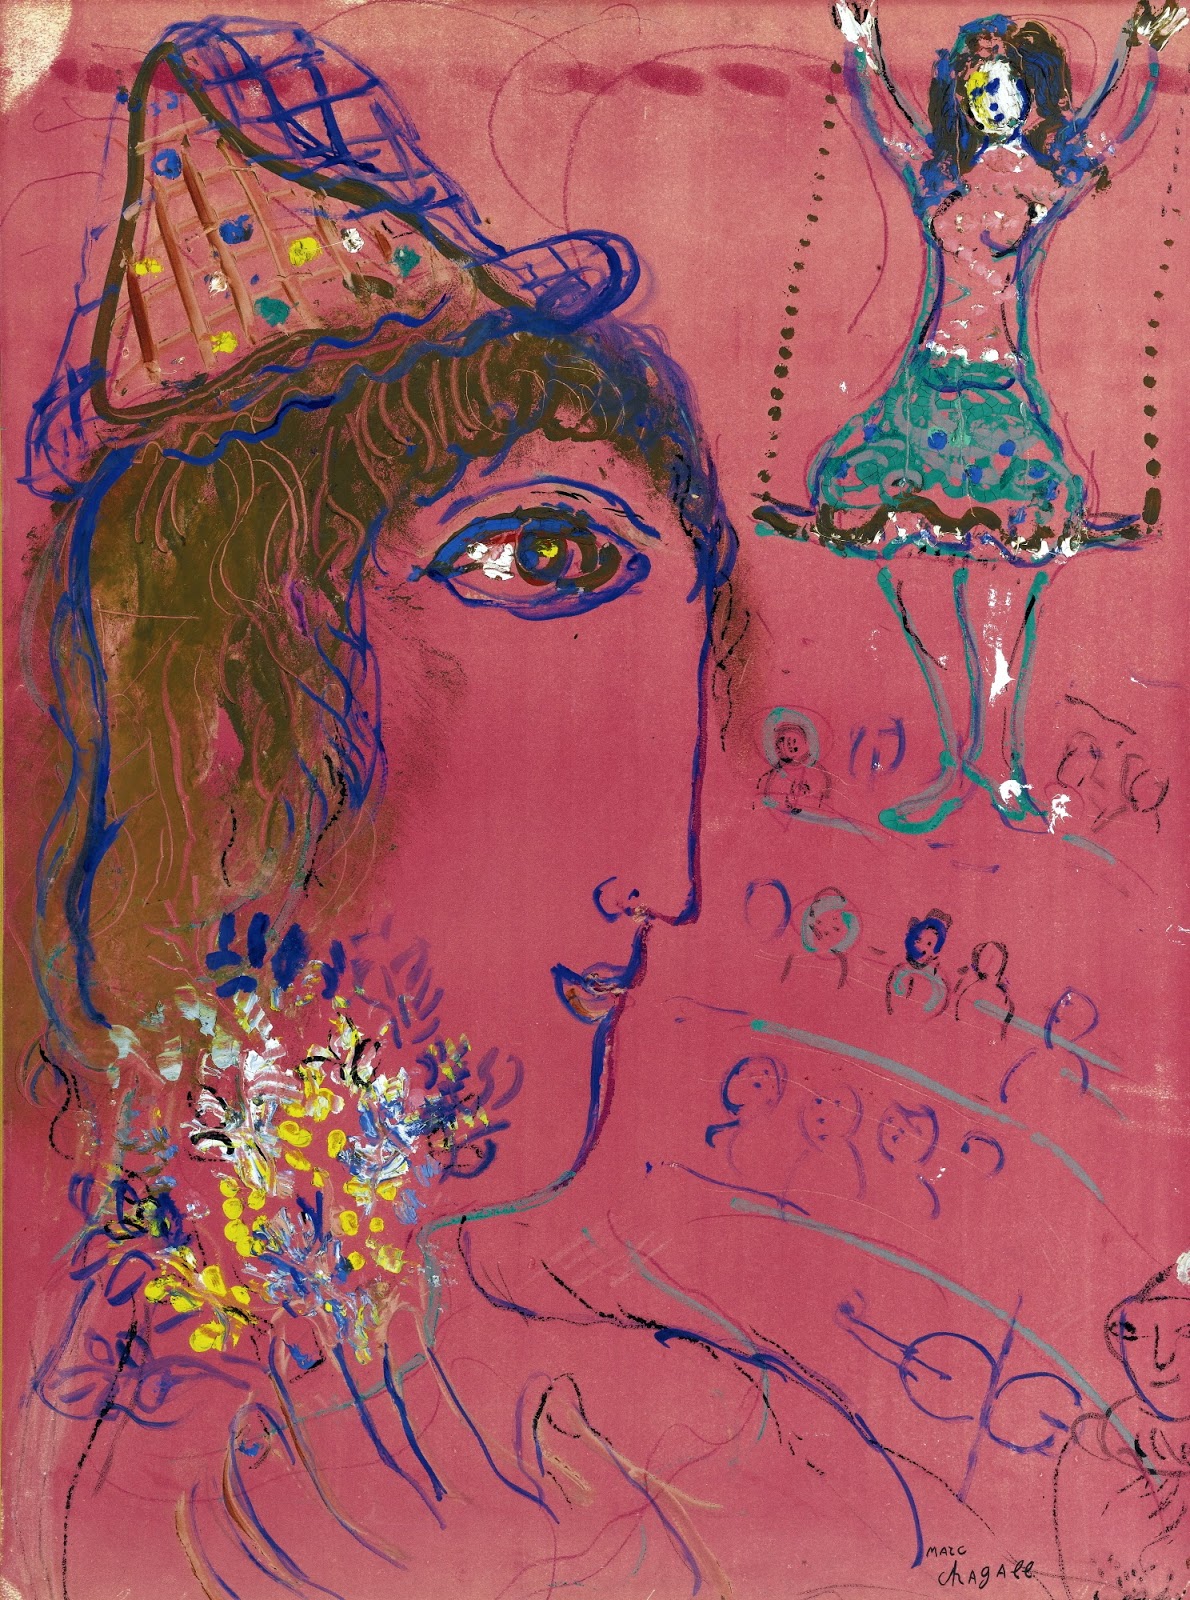 Marc+Chagall-1887-1985 (283).jpg